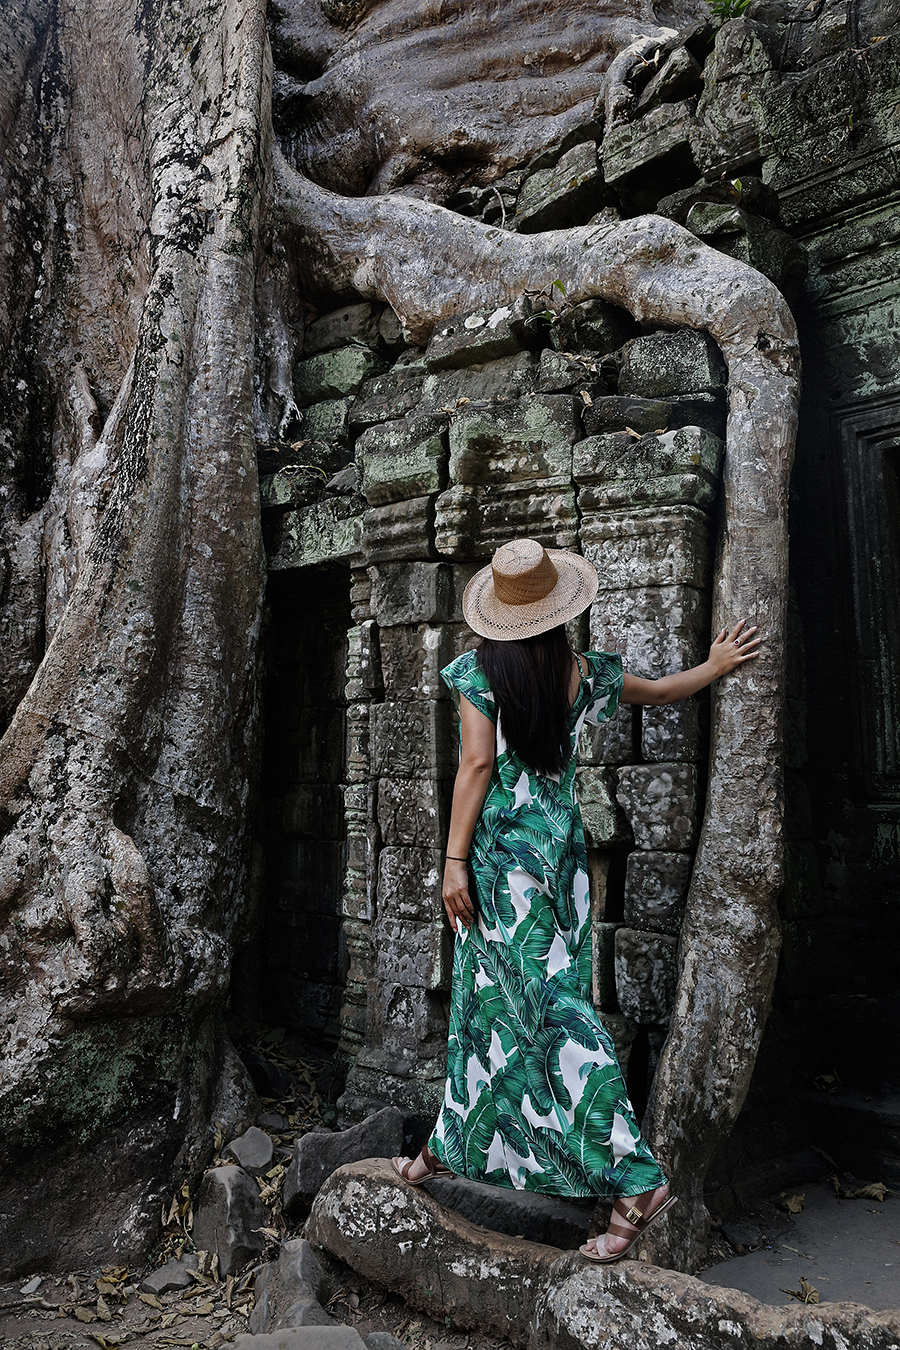 Feeling the Lara Croft fantasy at the "Tomb Raider temple": Ta Prohm in Siem Reap, Cambodia